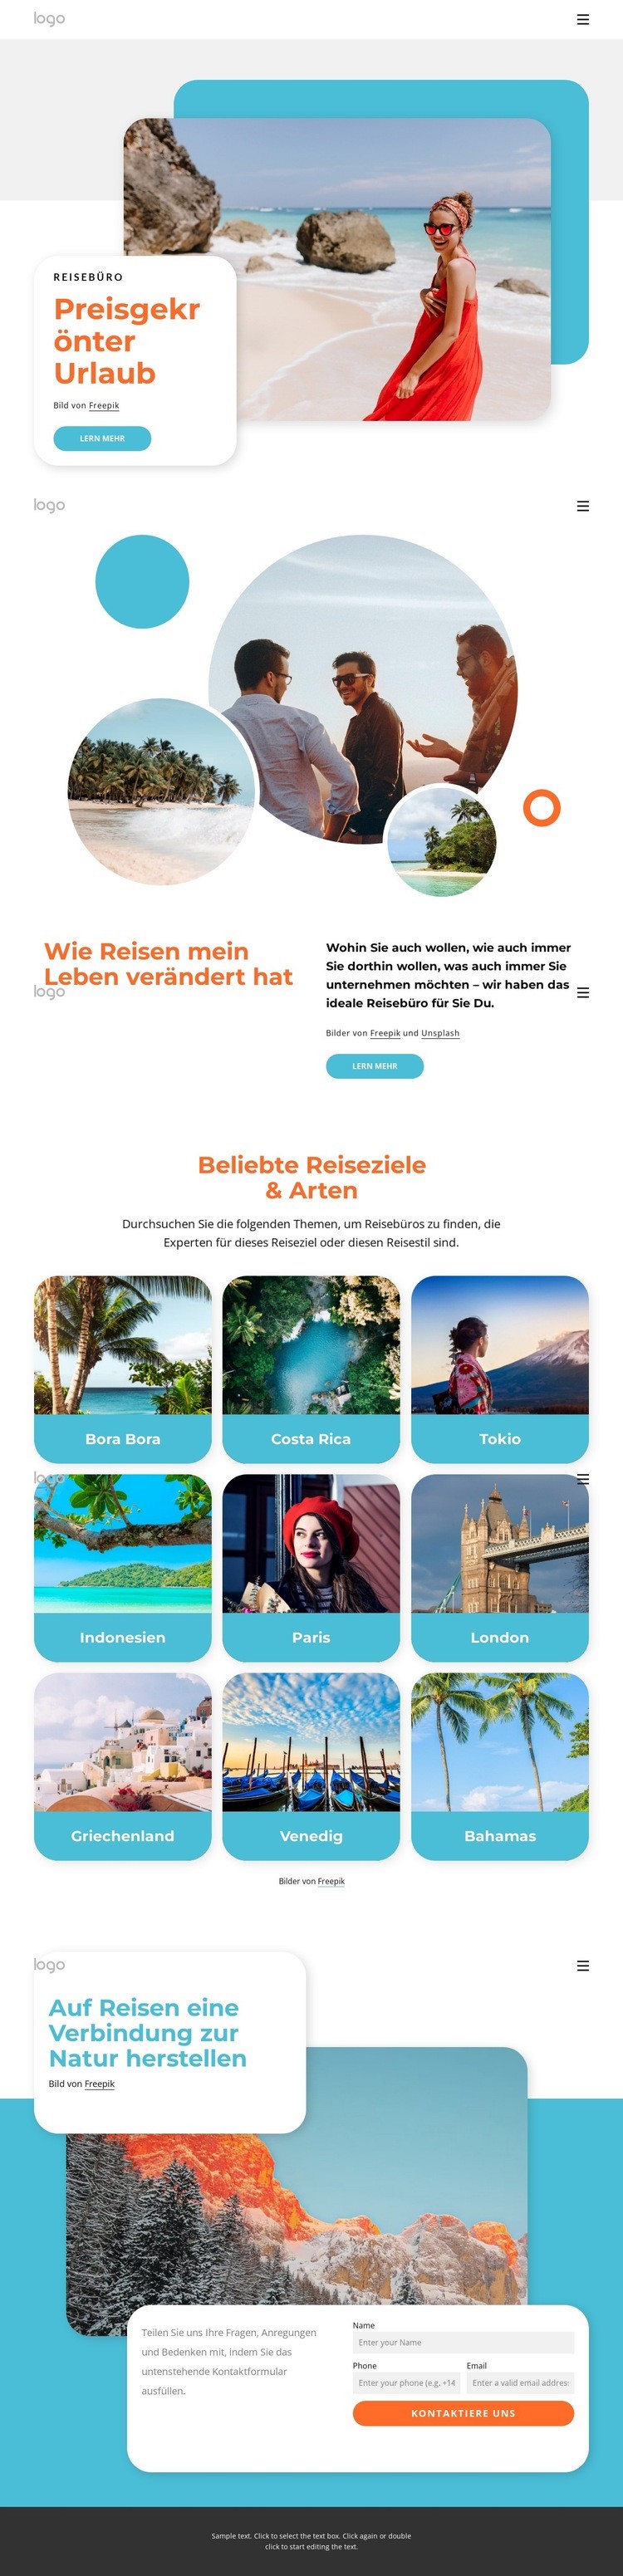 Preisgekrönter Urlaub Website-Modell